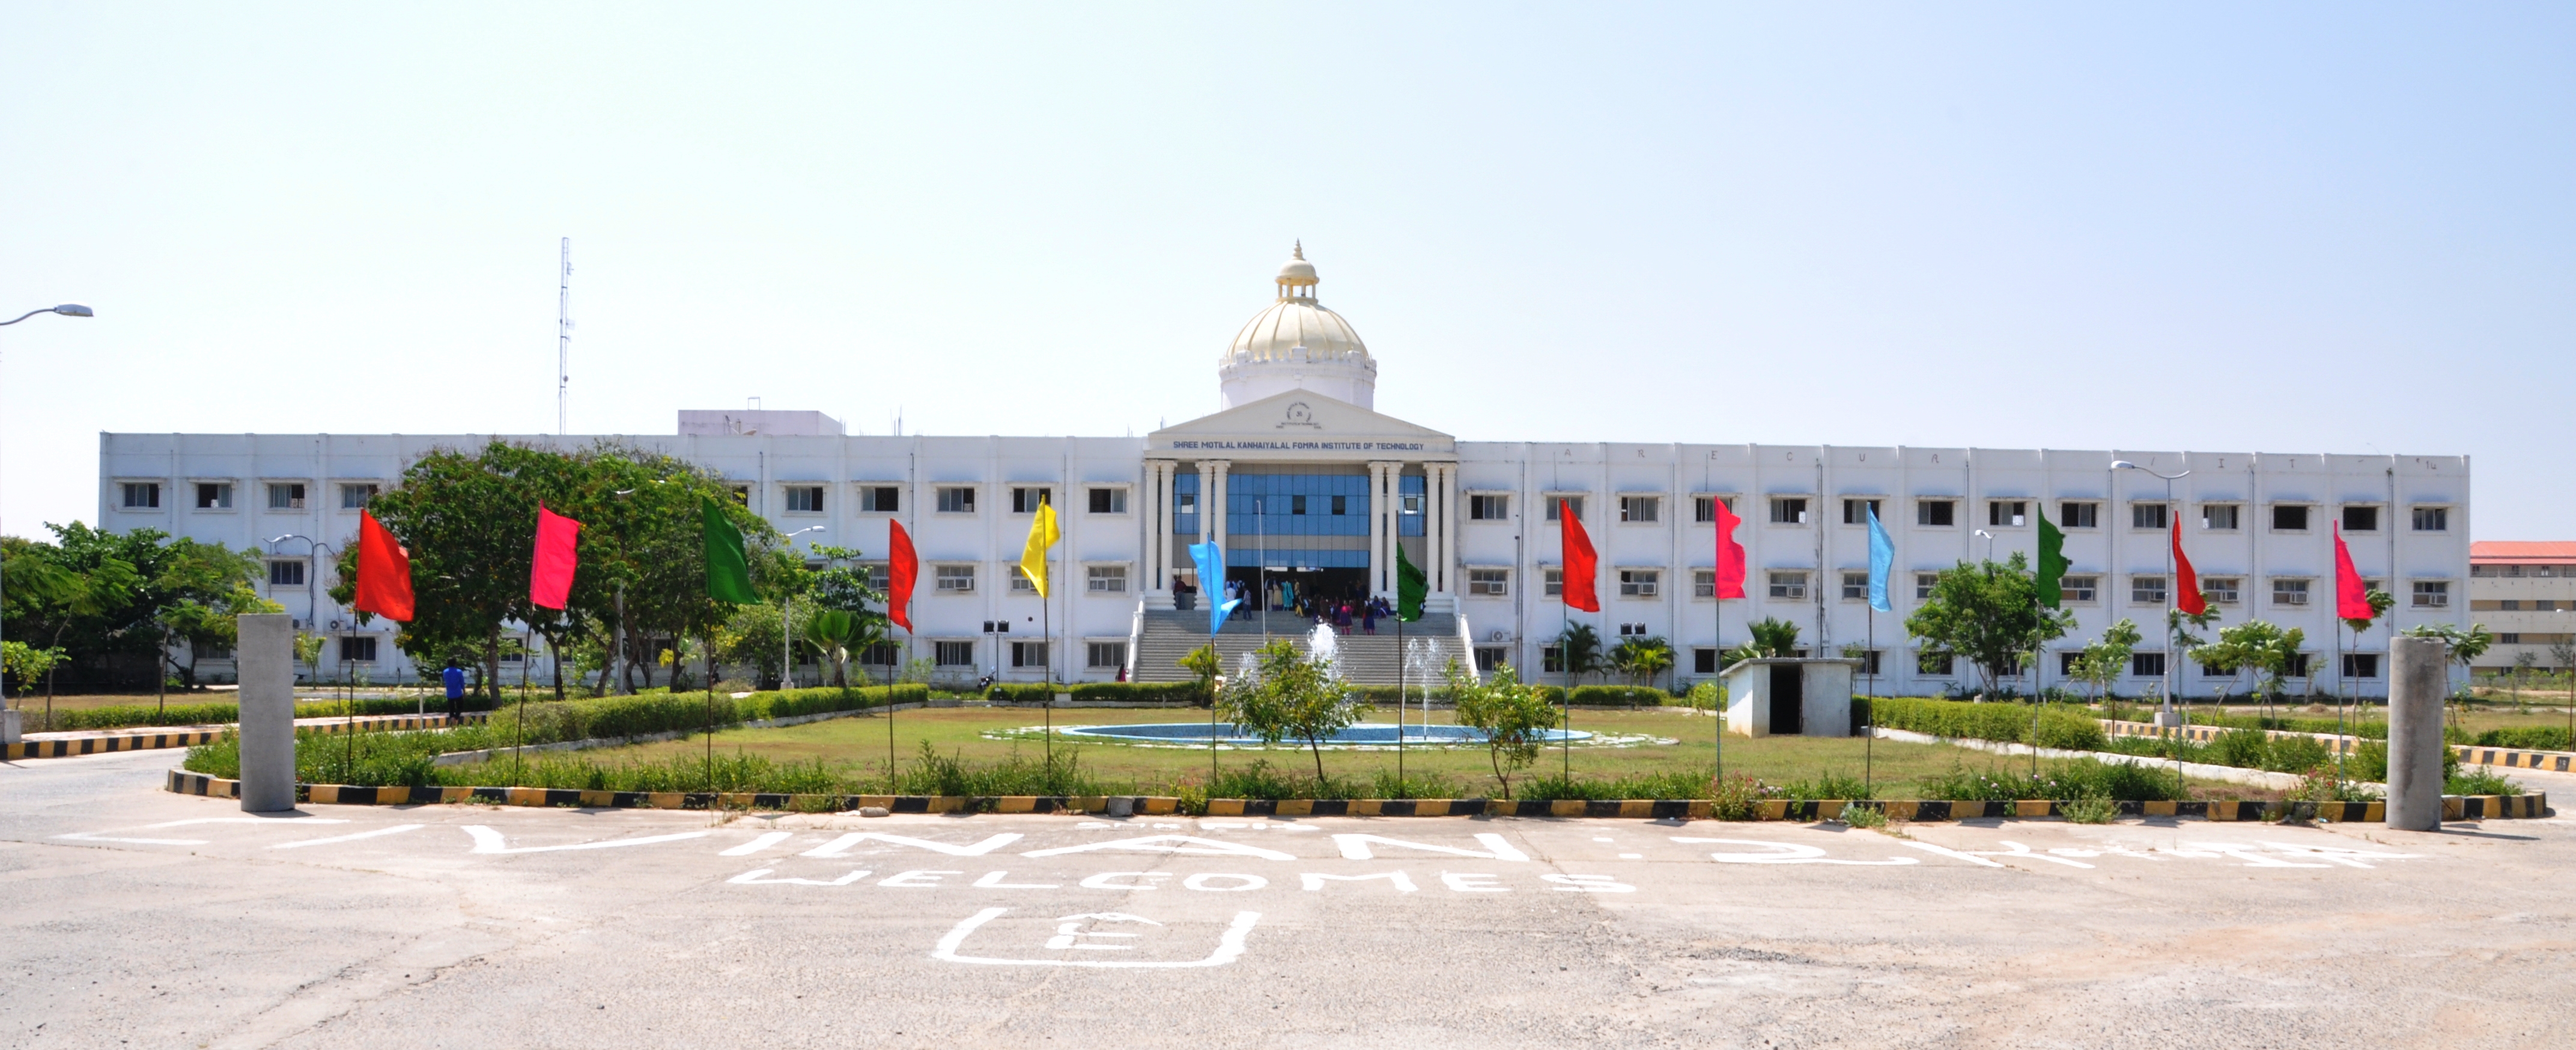 SMK Fomra Institute of Technology, Chennai Image